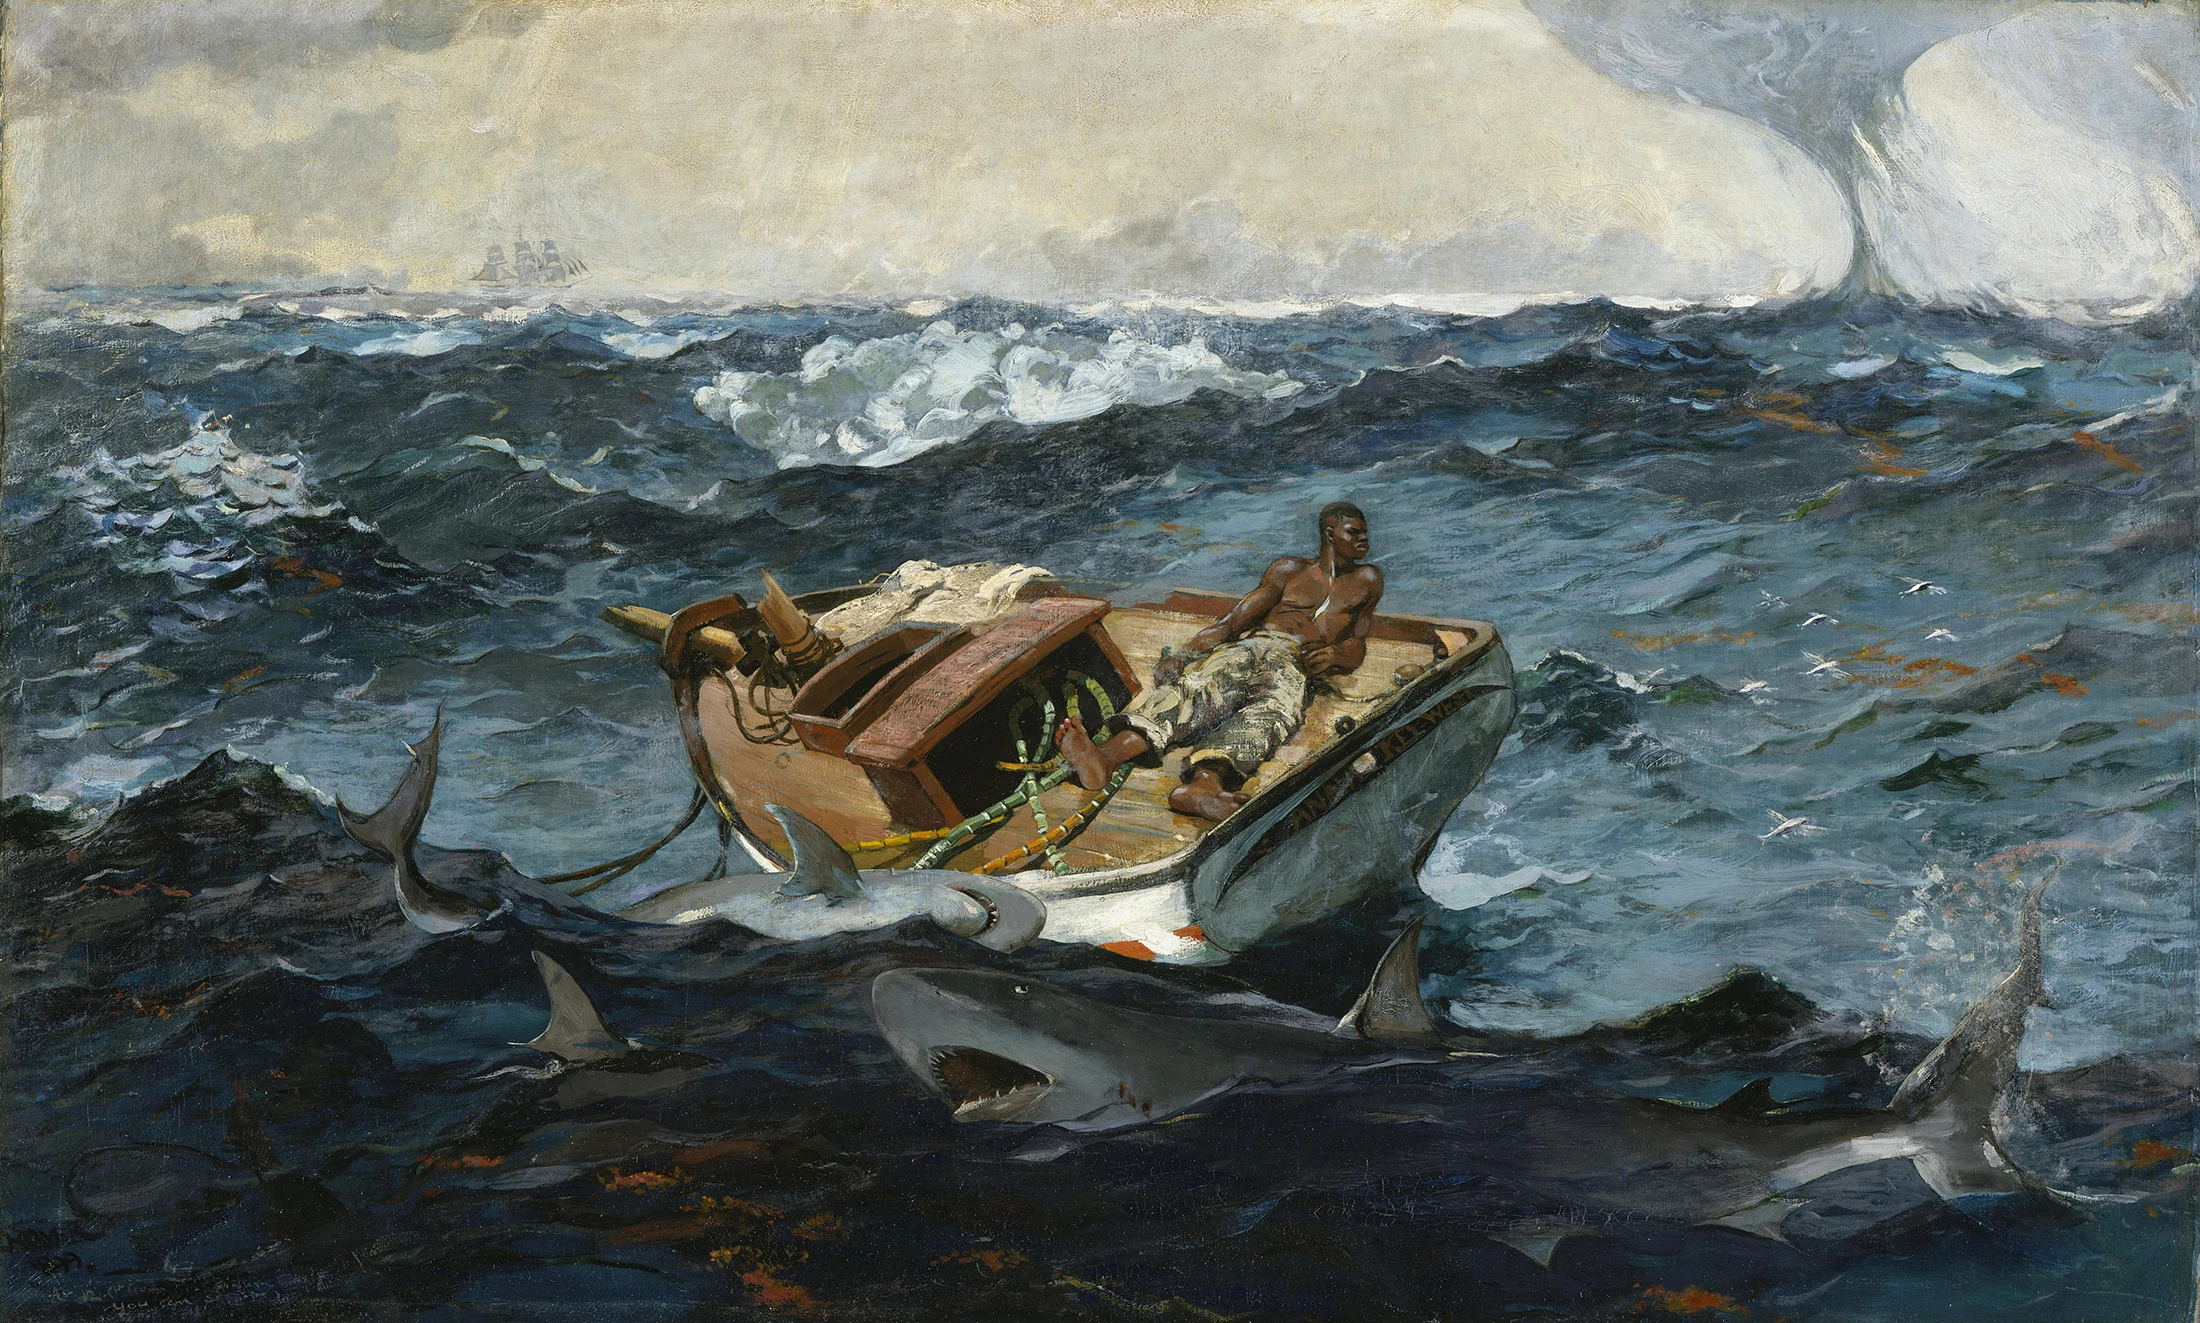 Winslow Homer, The Artists